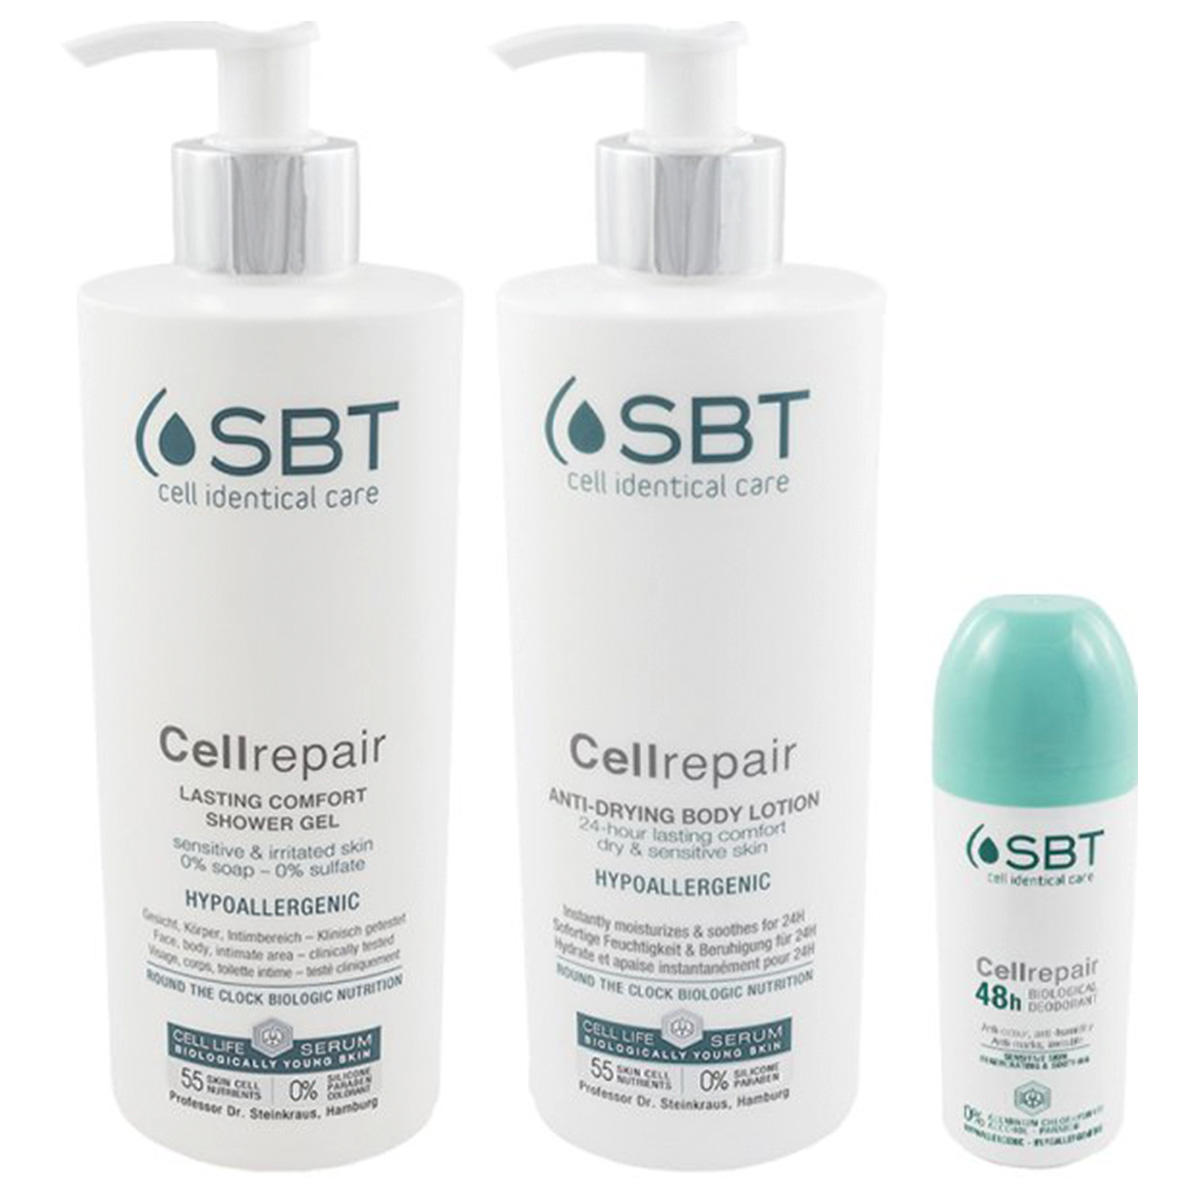 SBT Cellrepair Body Set Anti-Humidity Roll-on Deodorant Gratis  - 1